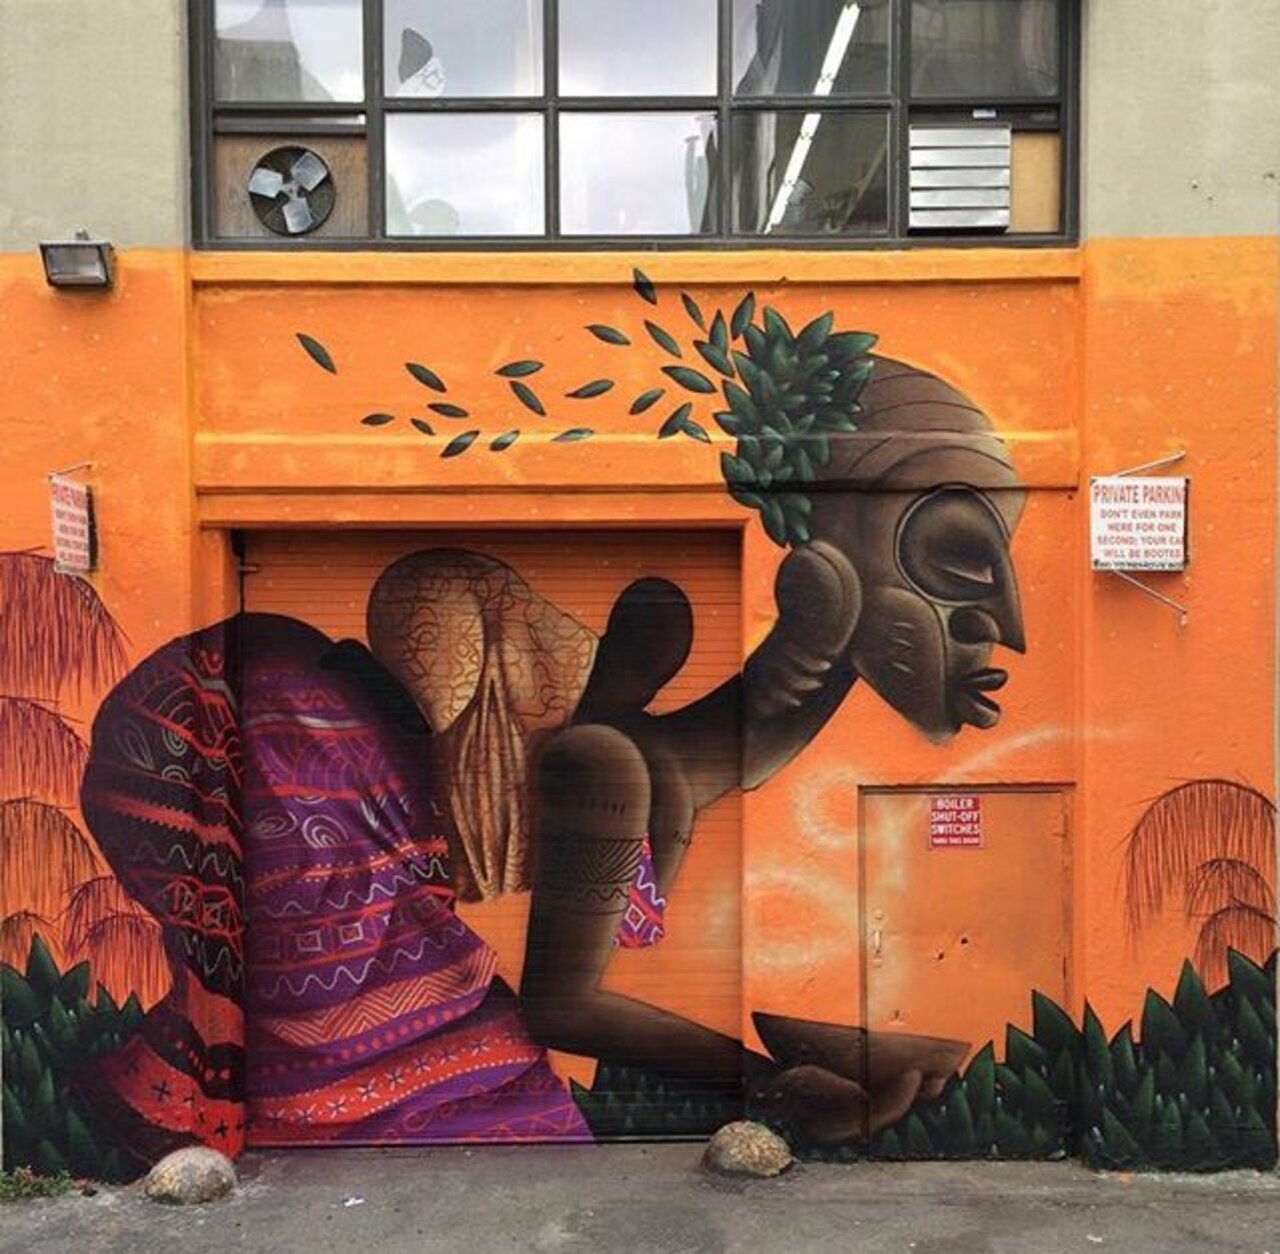 RT @EPL_ArabicNews: New Street Art by Alexandre Keto in NYC 

#art #graffiti #mural #streetart https://t.co/qMb7ZIaHcv